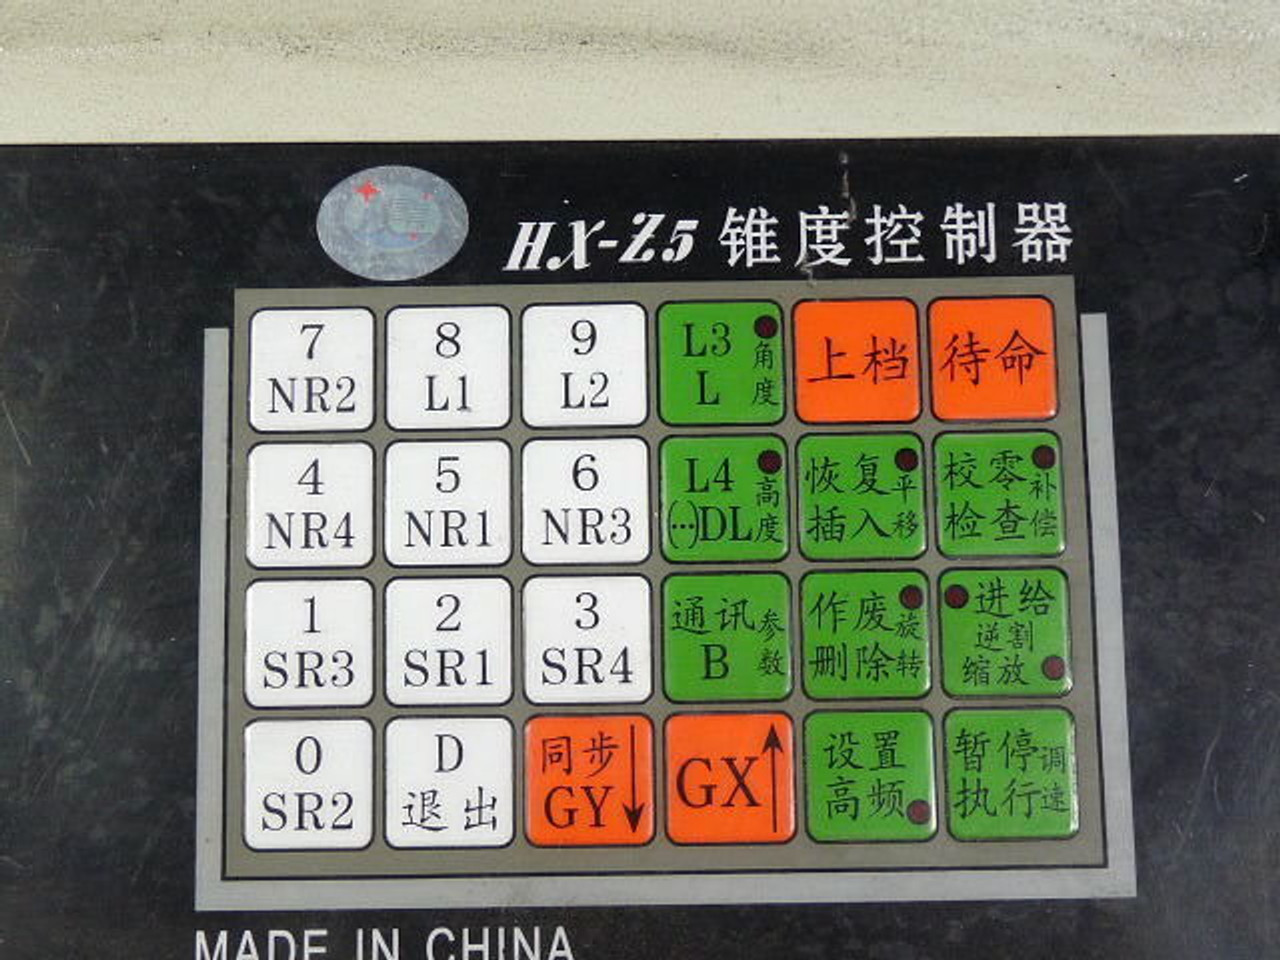 Zhongshan HX-Z5 Electronic Weighing Scale 100-240V 3-30Kg USED